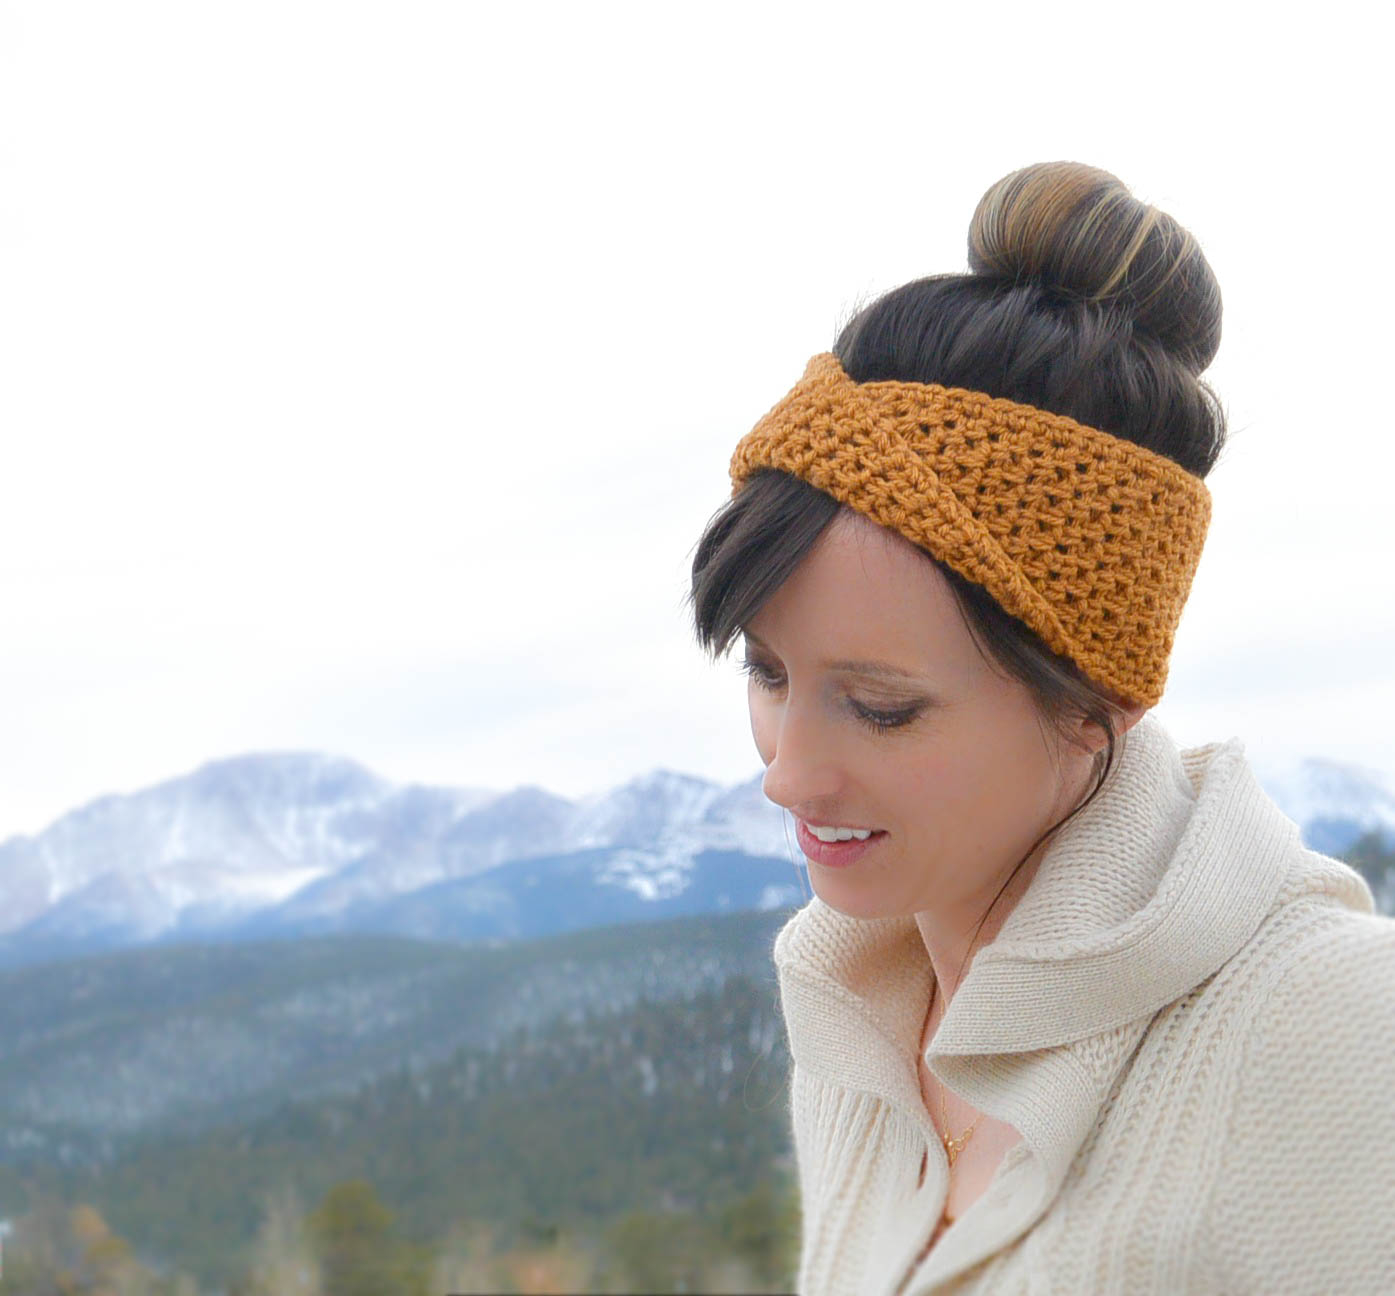 Crochet Headband With Flower Pattern Golden Fave Twist Headband Free Crochet Pattern Mama In A Stitch